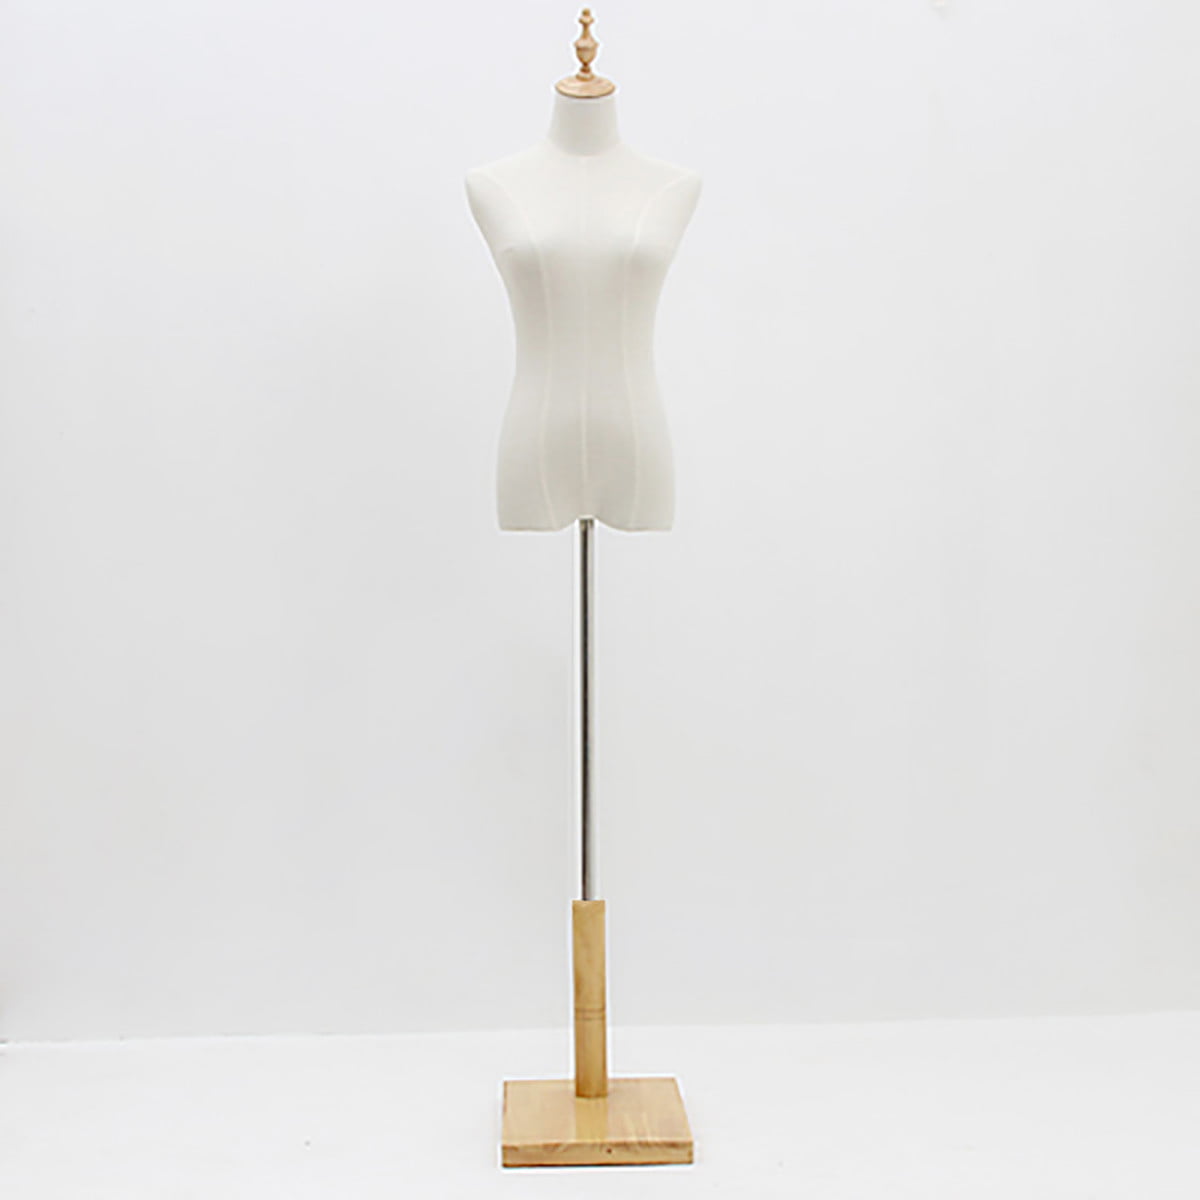 12 x CREAM Female Body Form Hanging Display Mannequin 